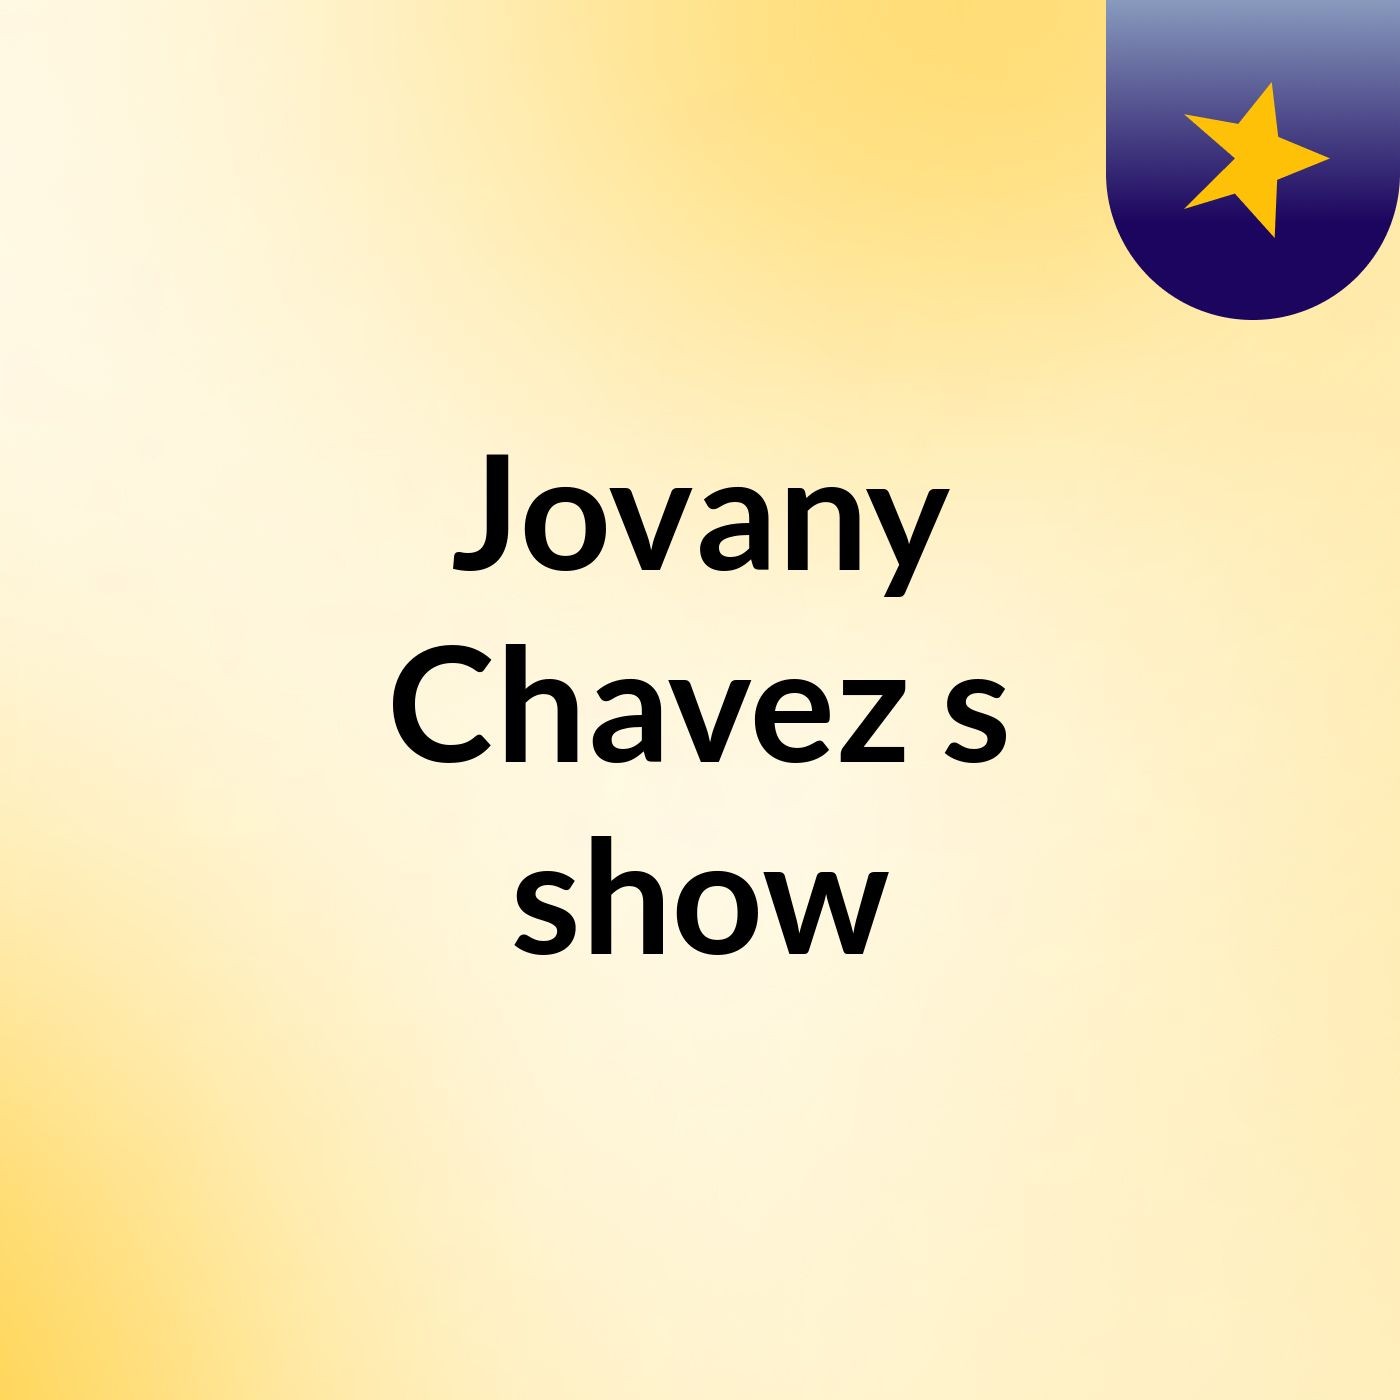 Jovany Chavez's show